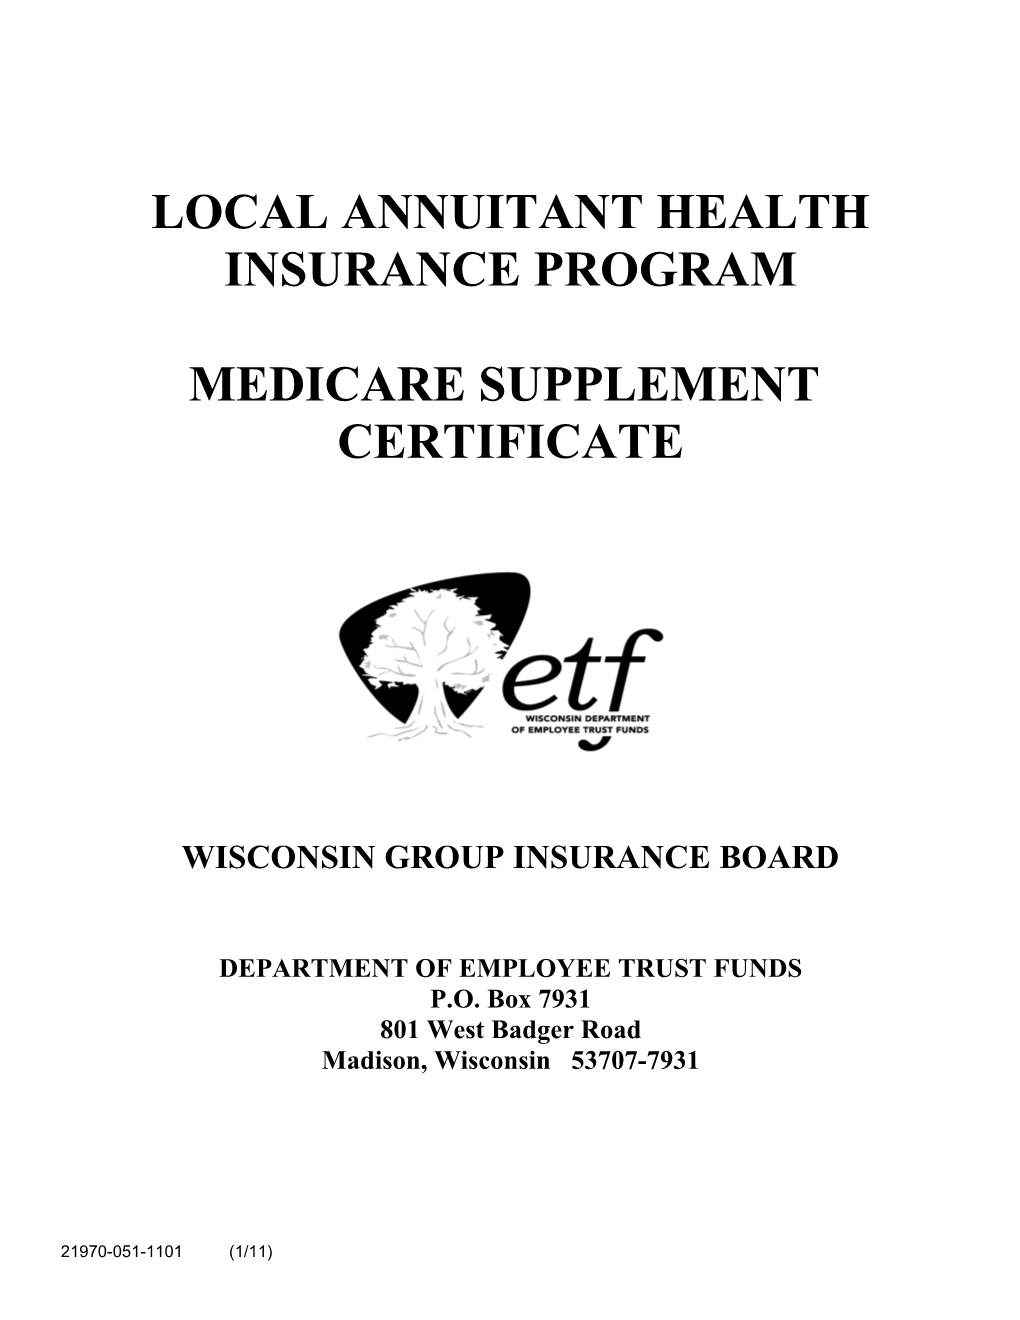 Local Annuitant Health Insurance Program